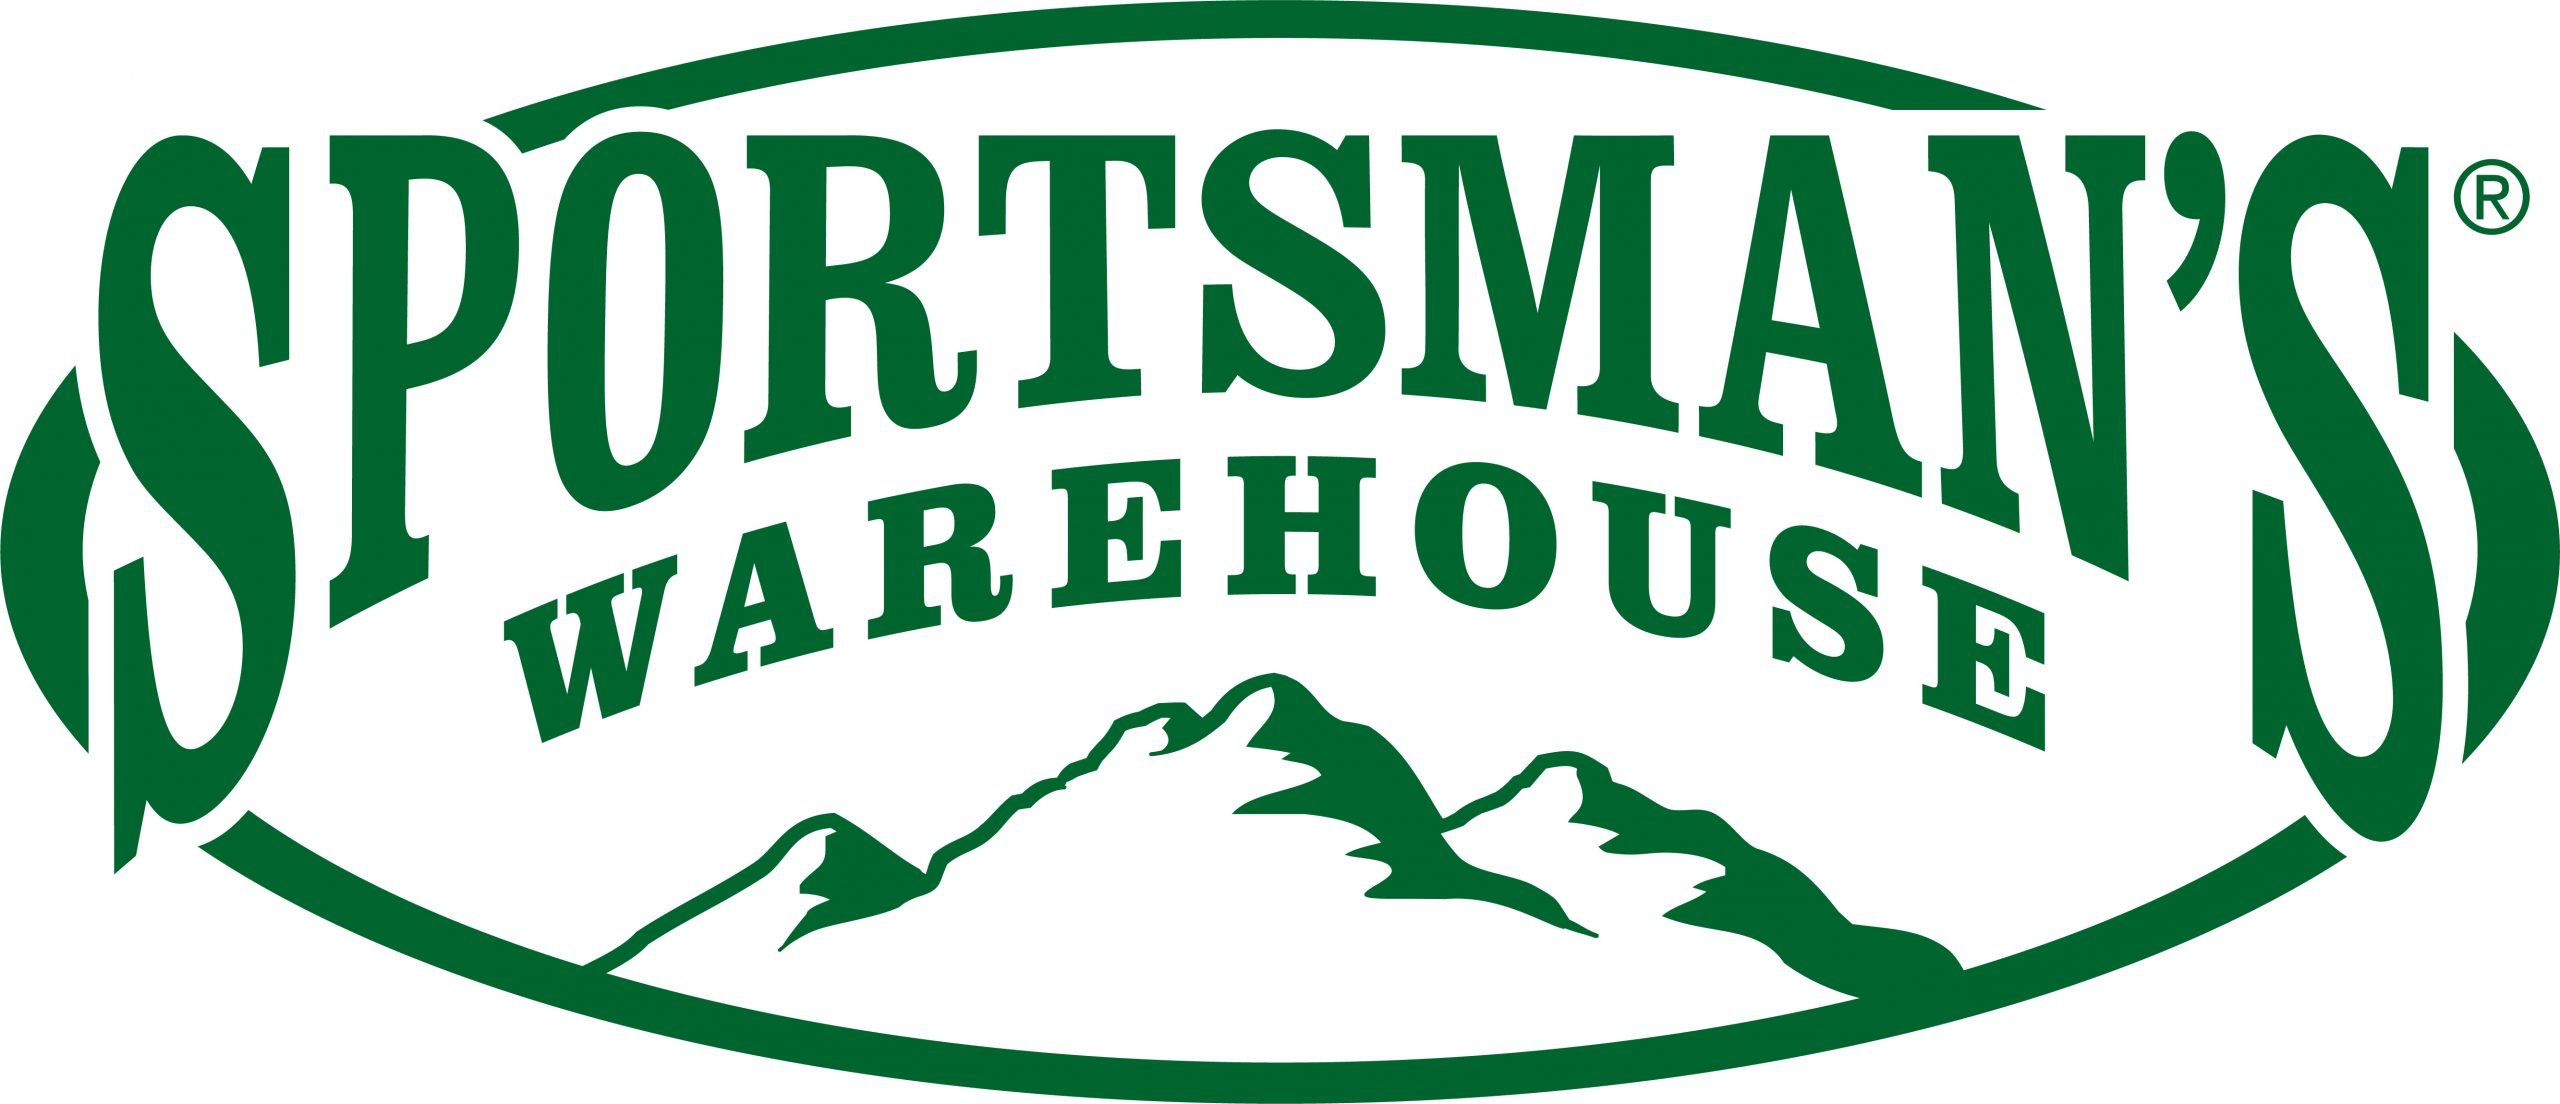 Sportsmans Warehouse logo